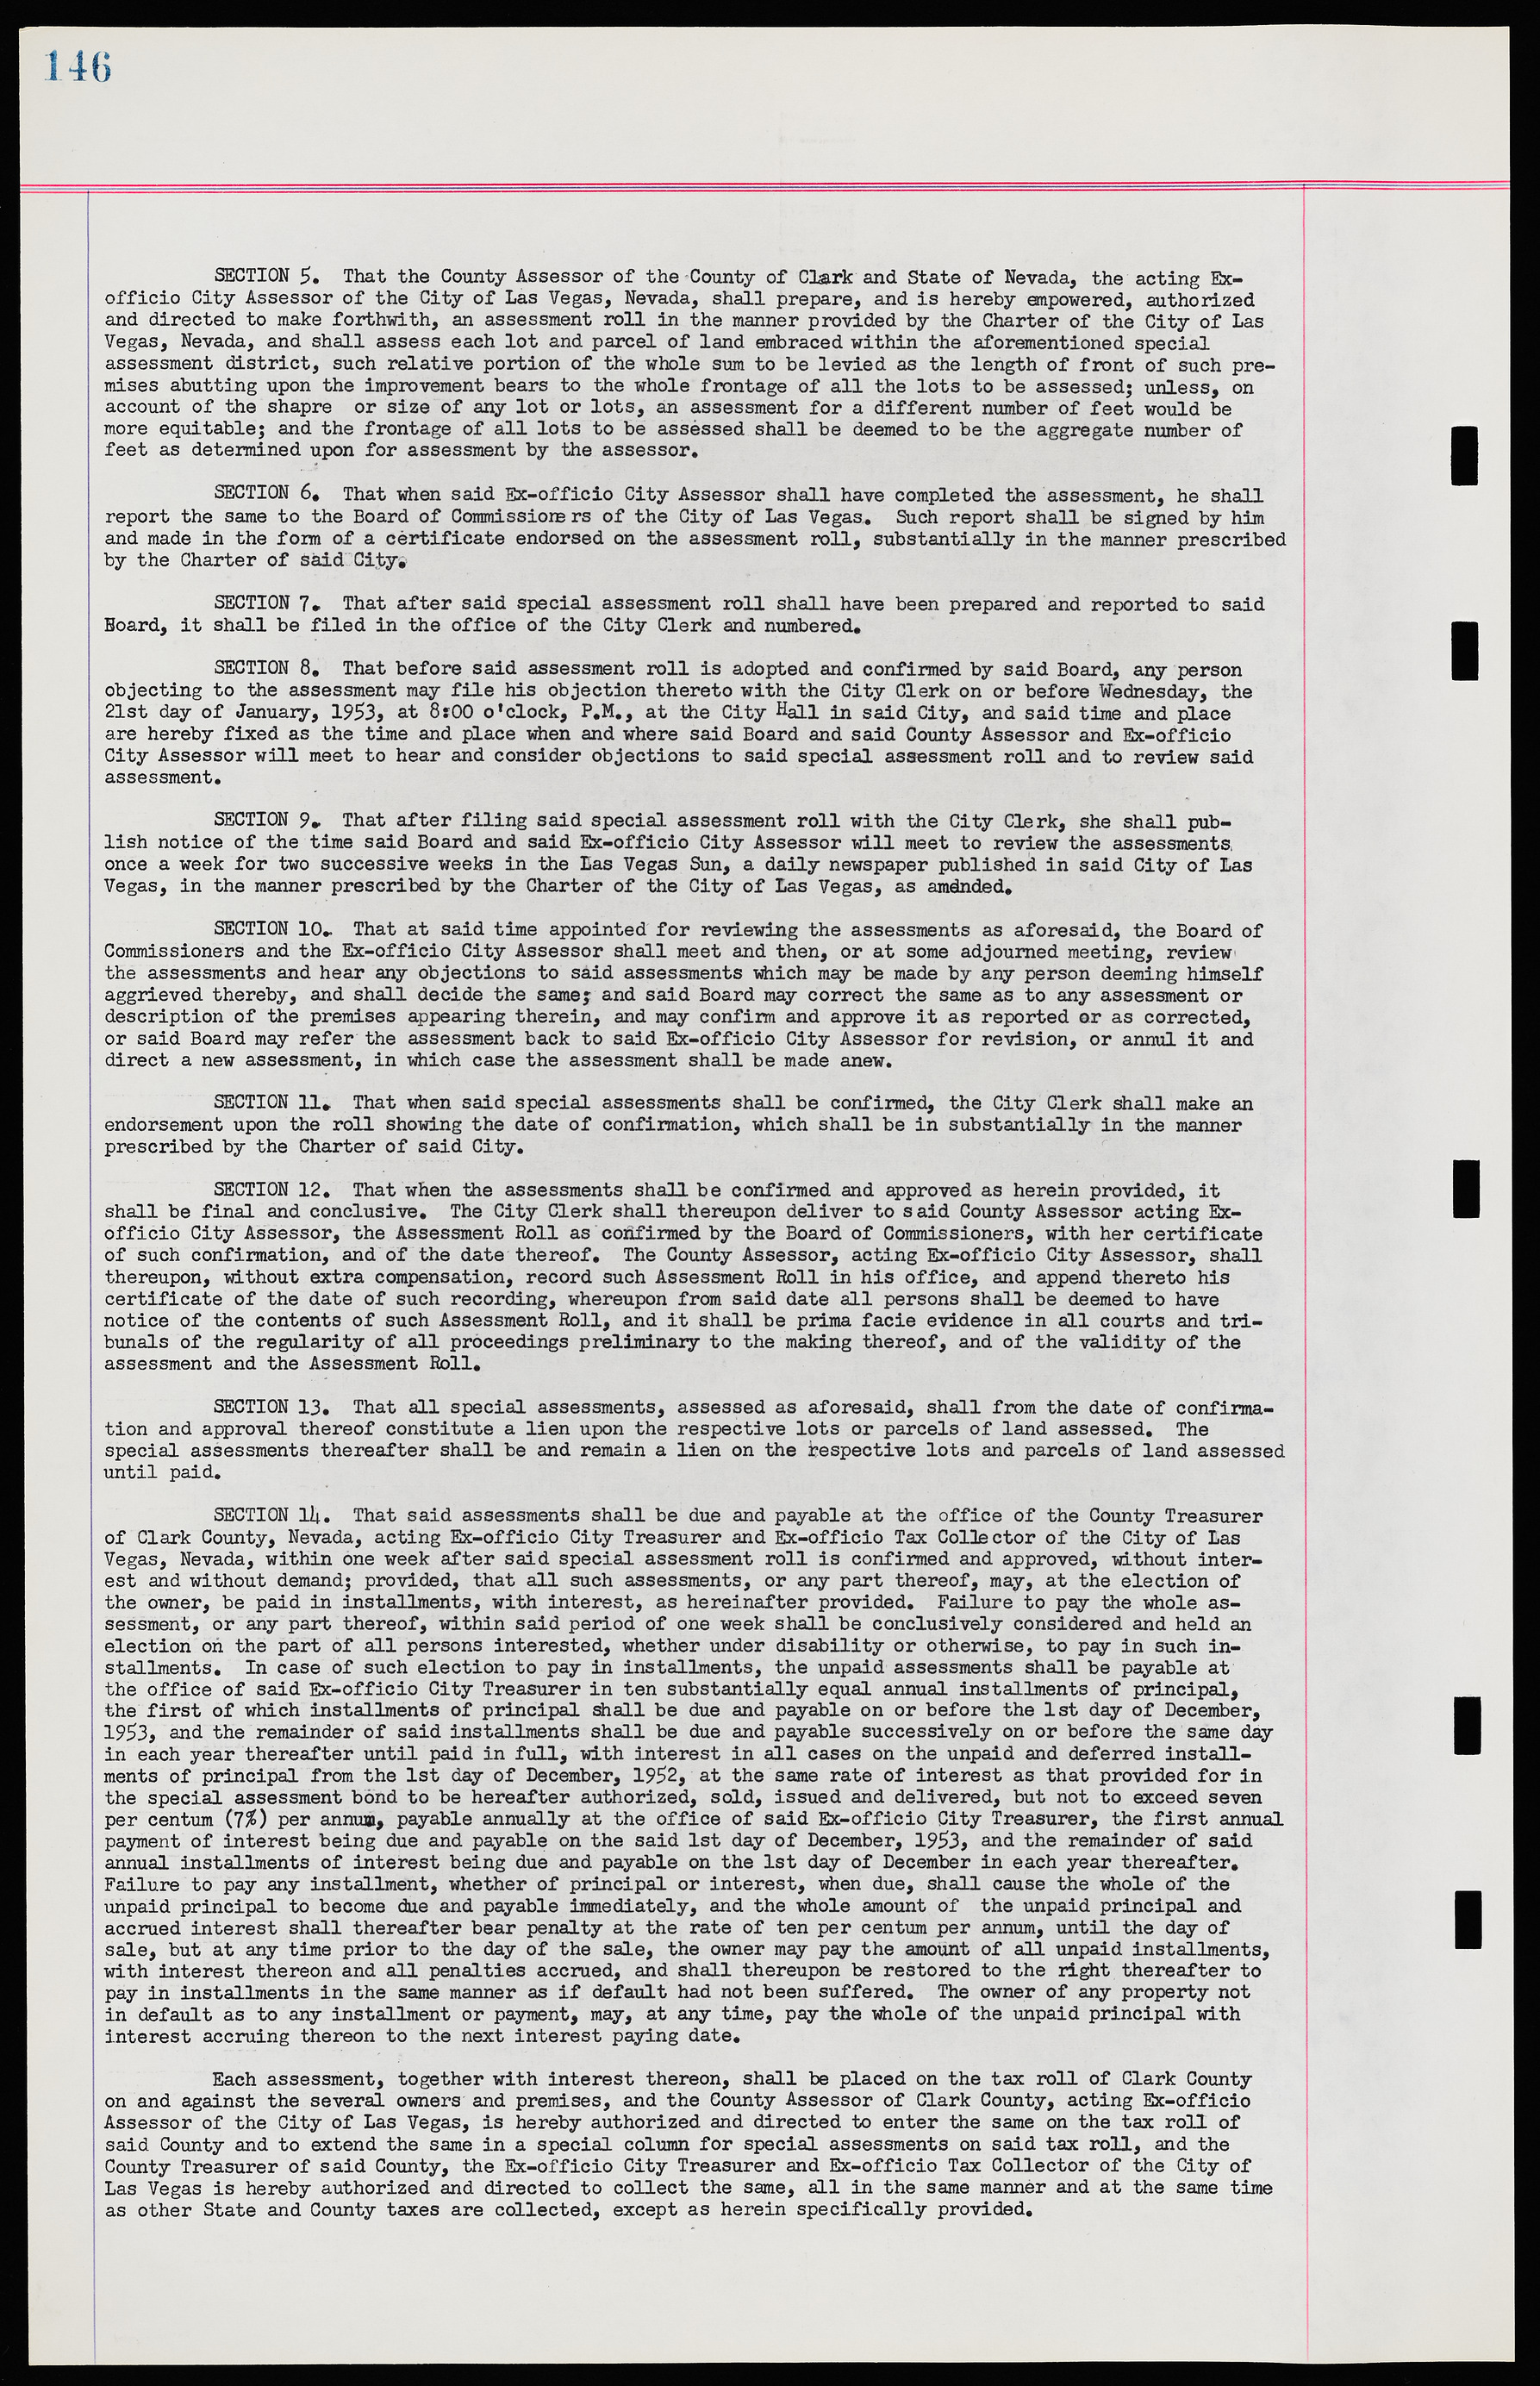 Las Vegas City Ordinances, November 13, 1950 to August 6, 1958, lvc000015-154